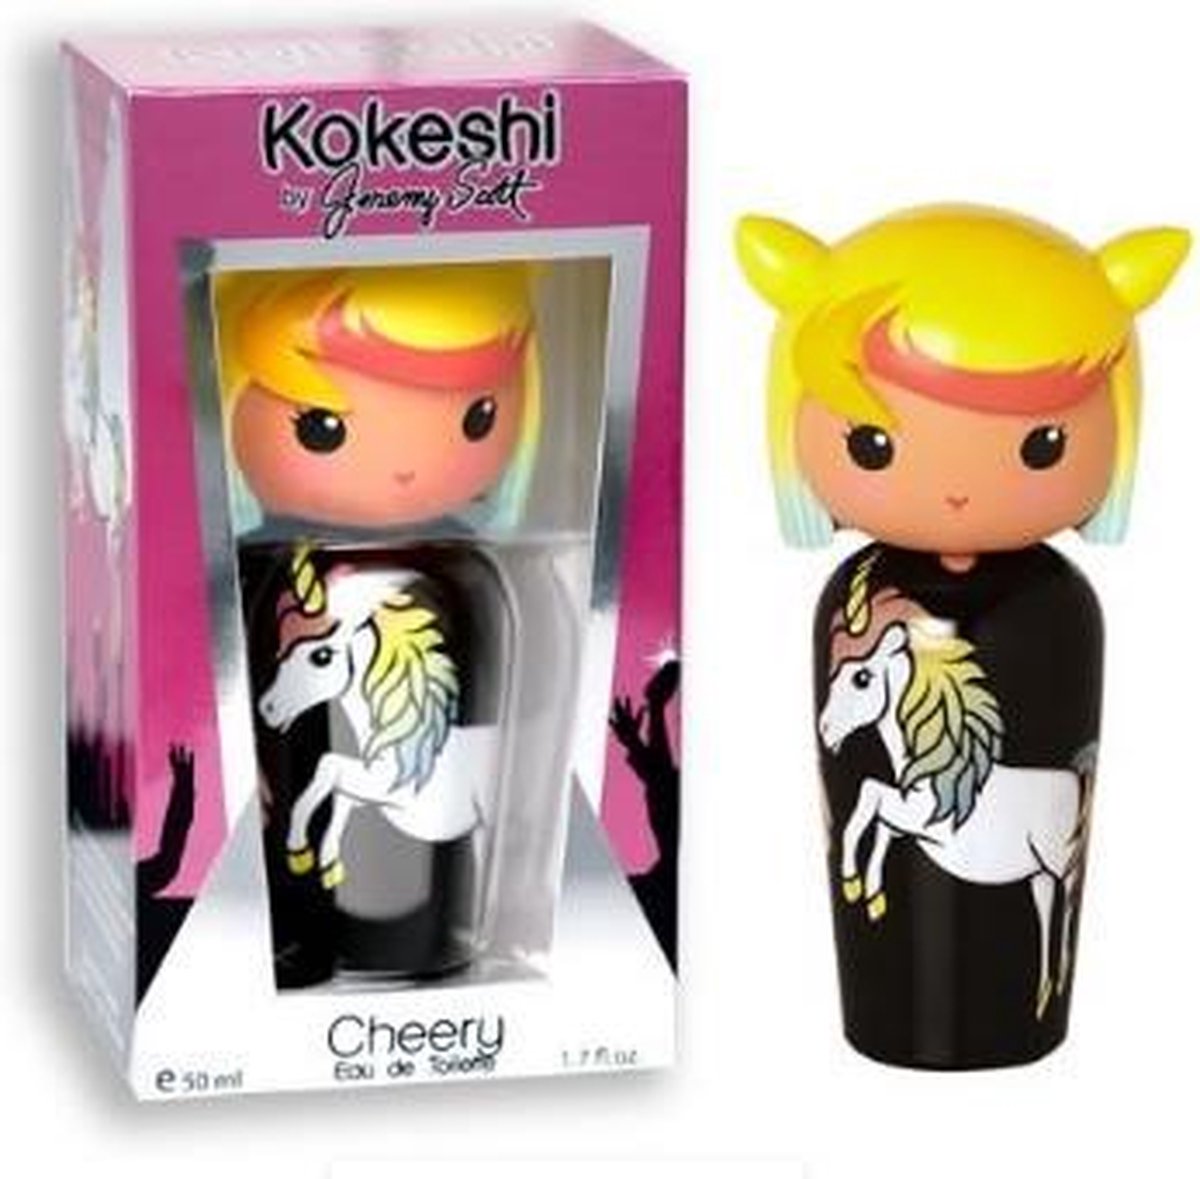 Kokeshi Cheery by Kokeshi 50 ml - Eau de Toilette Spray